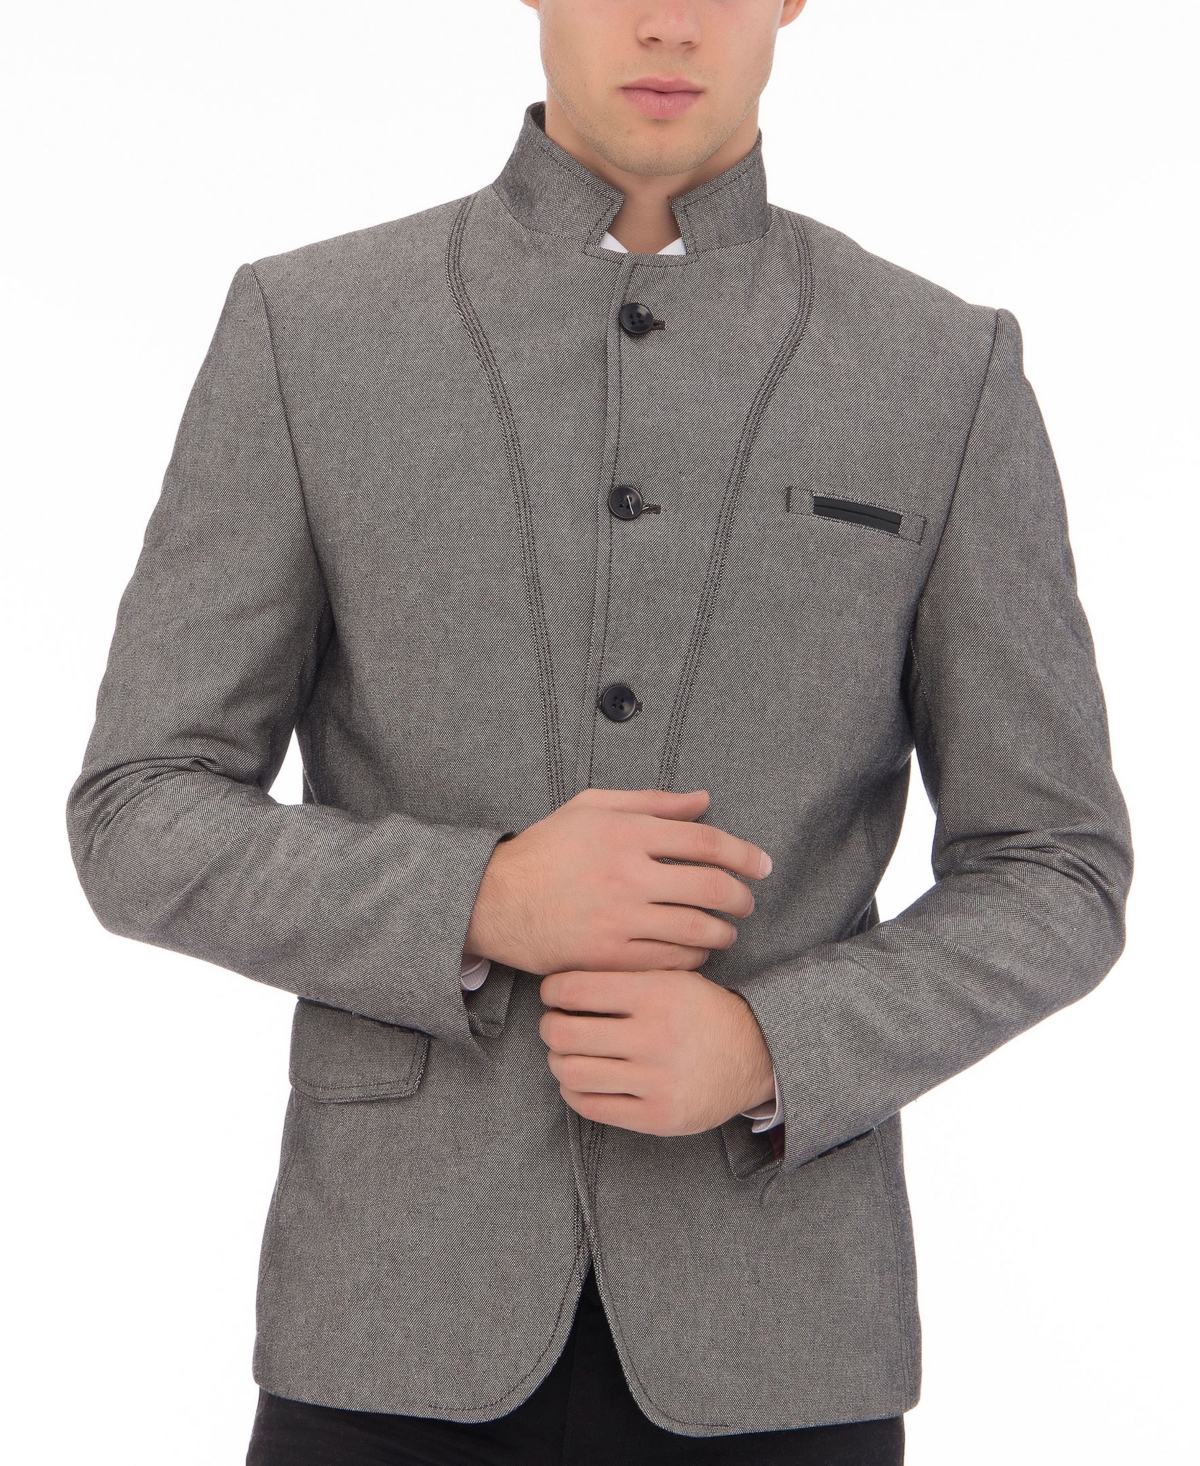 Men's Modern Symmetric Button Closure Sports Jacket - Gray